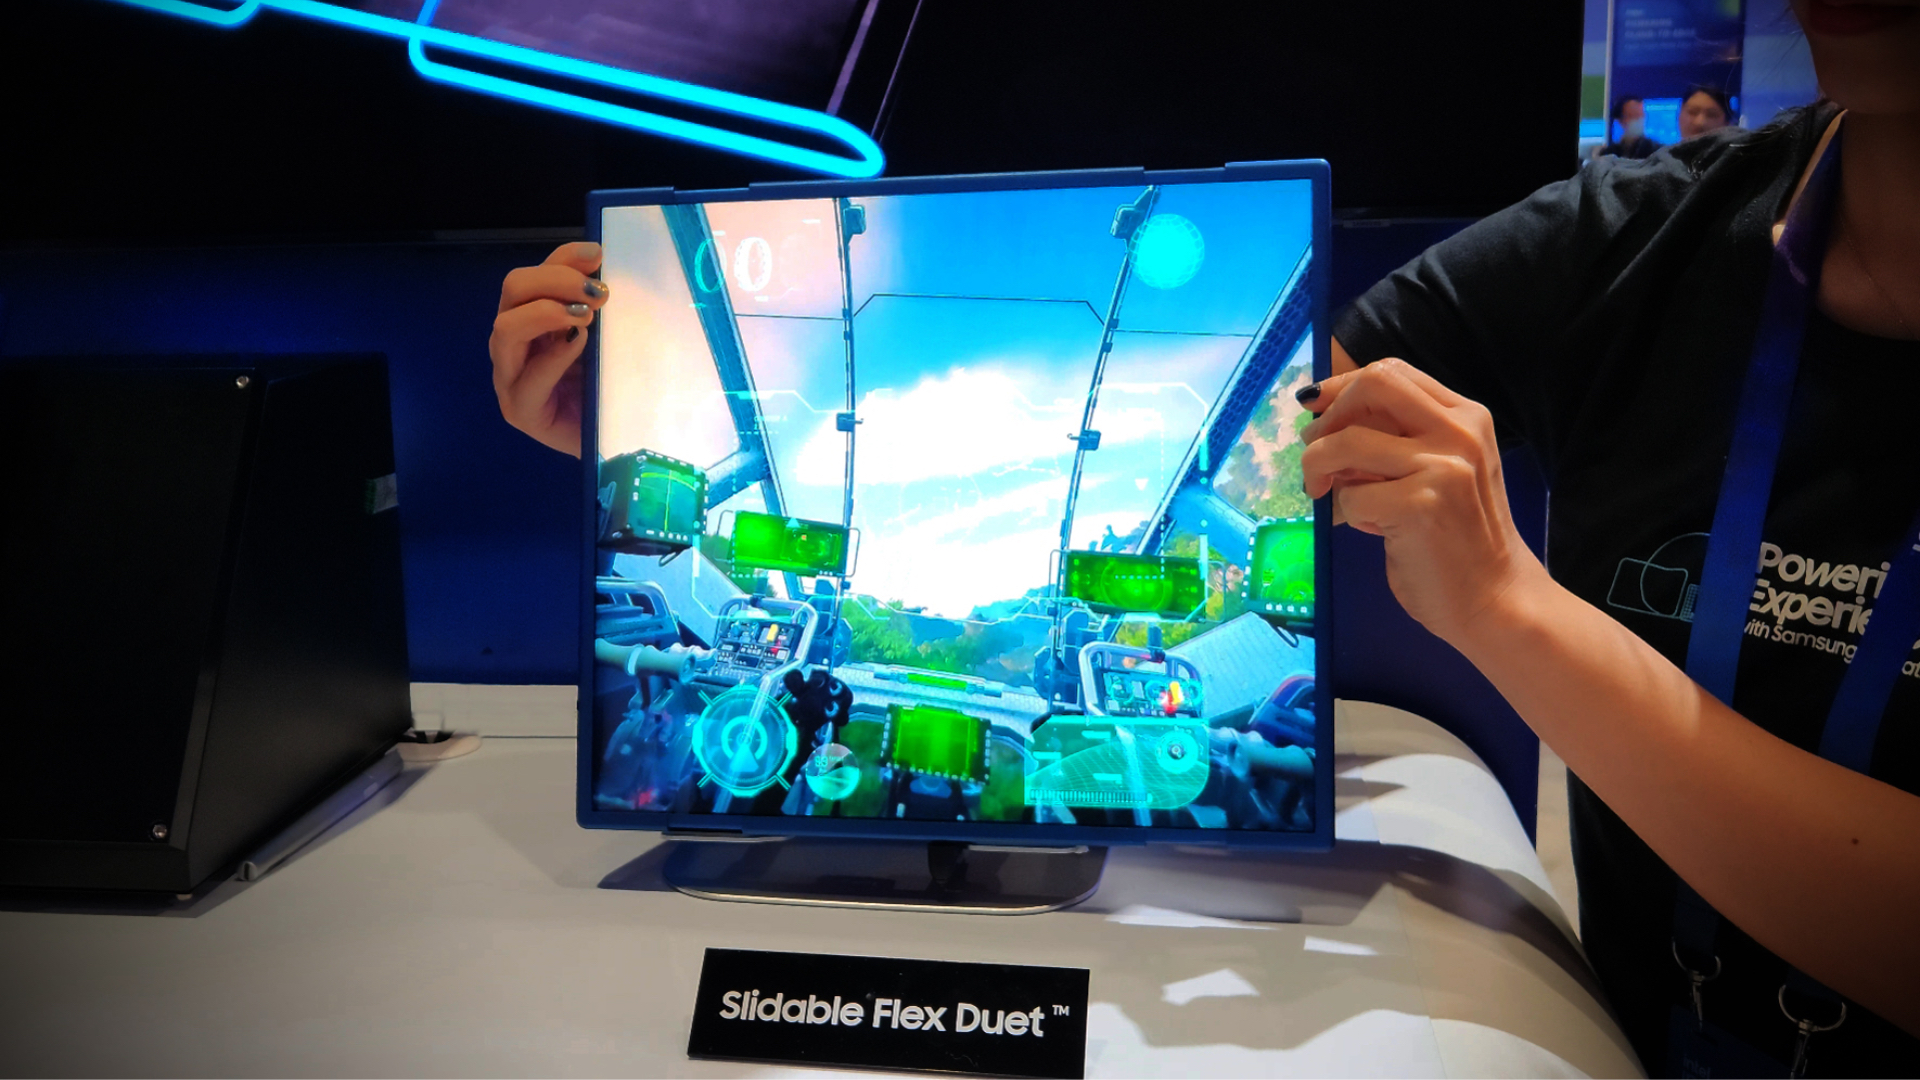 Samsung Slidable Flex Duet OLED Screen